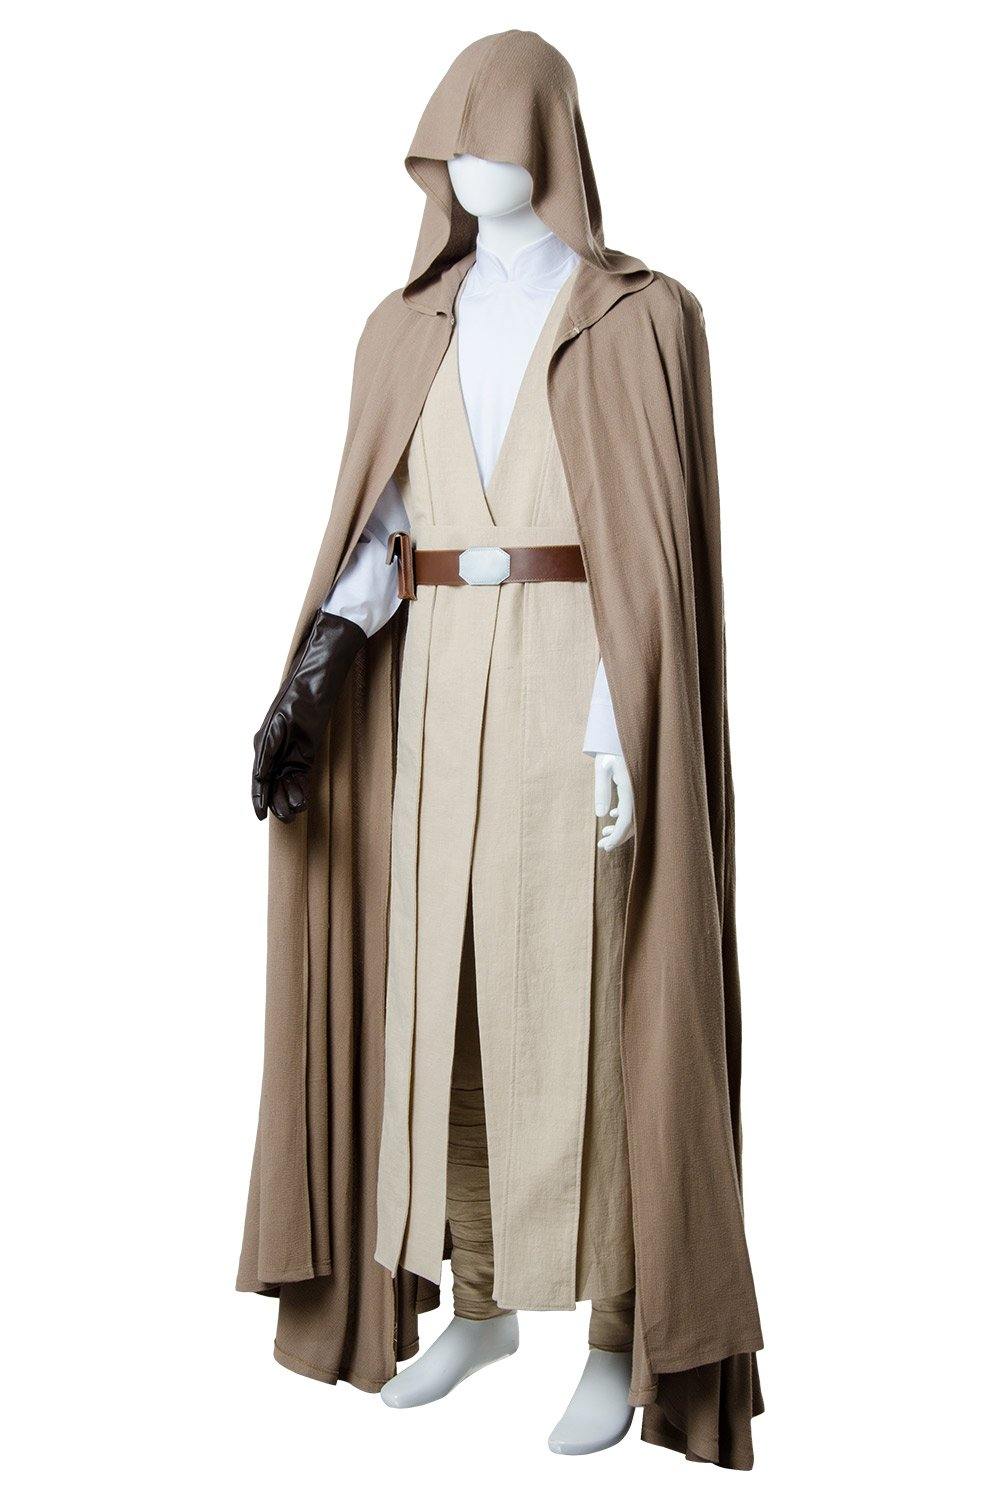 Star Wars 8 Die Letzten Jedi Luke Skywalker Cosplay Kostüm - cosplaycartde